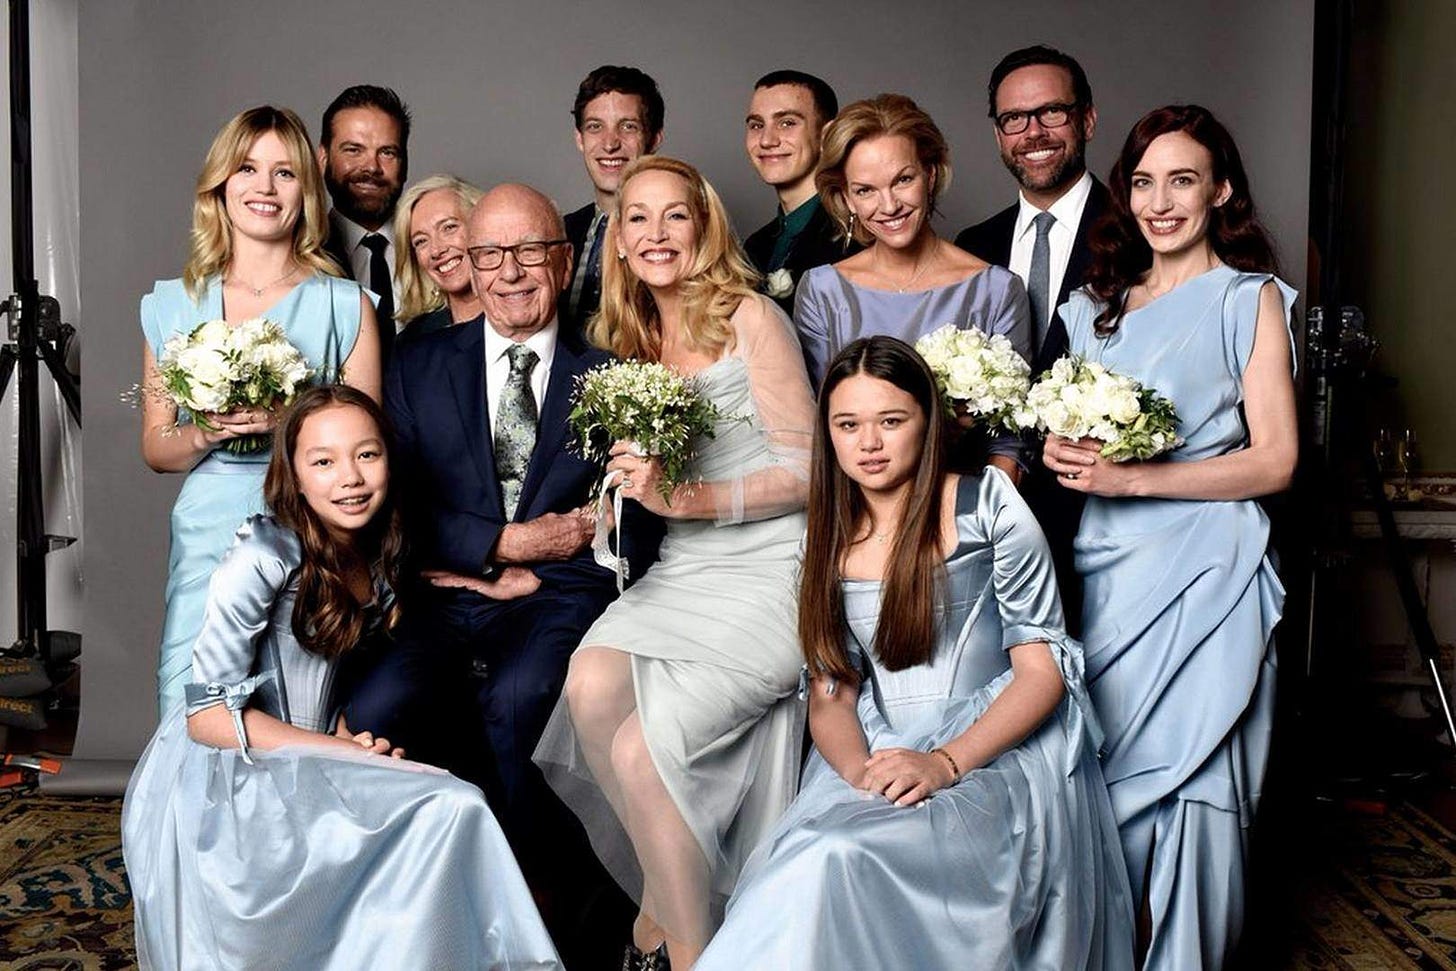 Murdoch children to become world's youngest billionaires